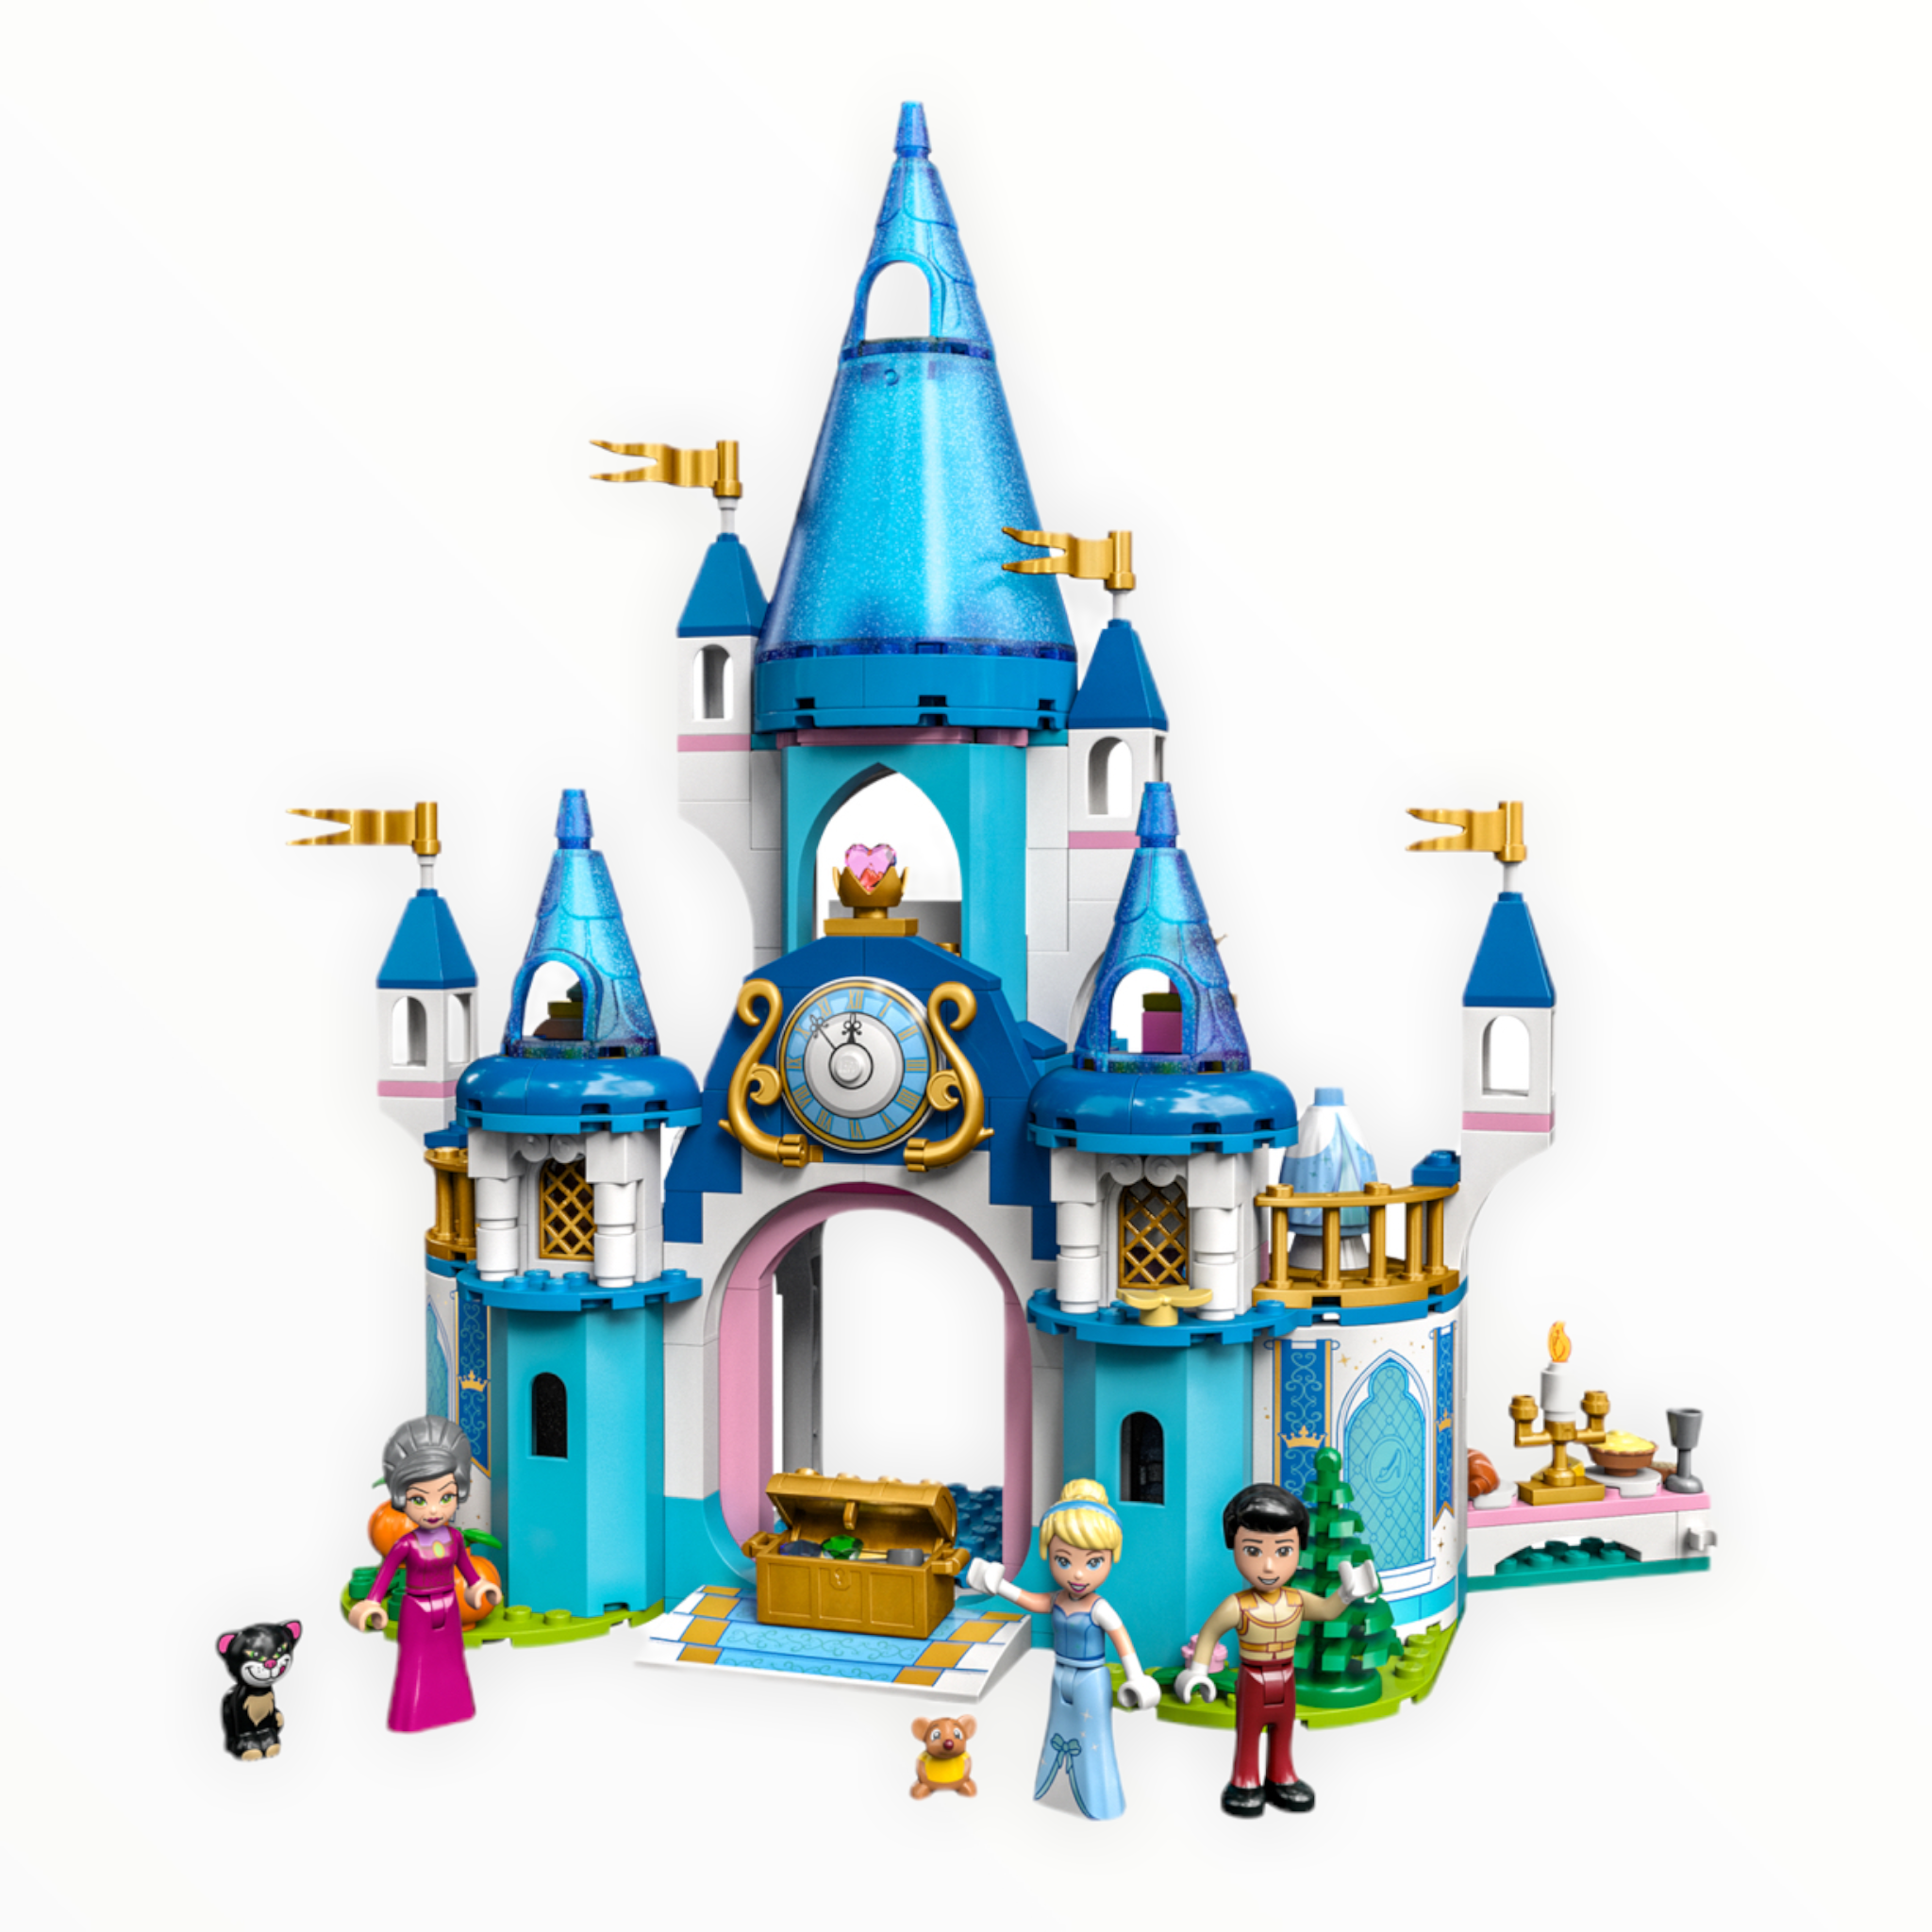 43206 Disney Cinderella and Prince Charming’s Castle